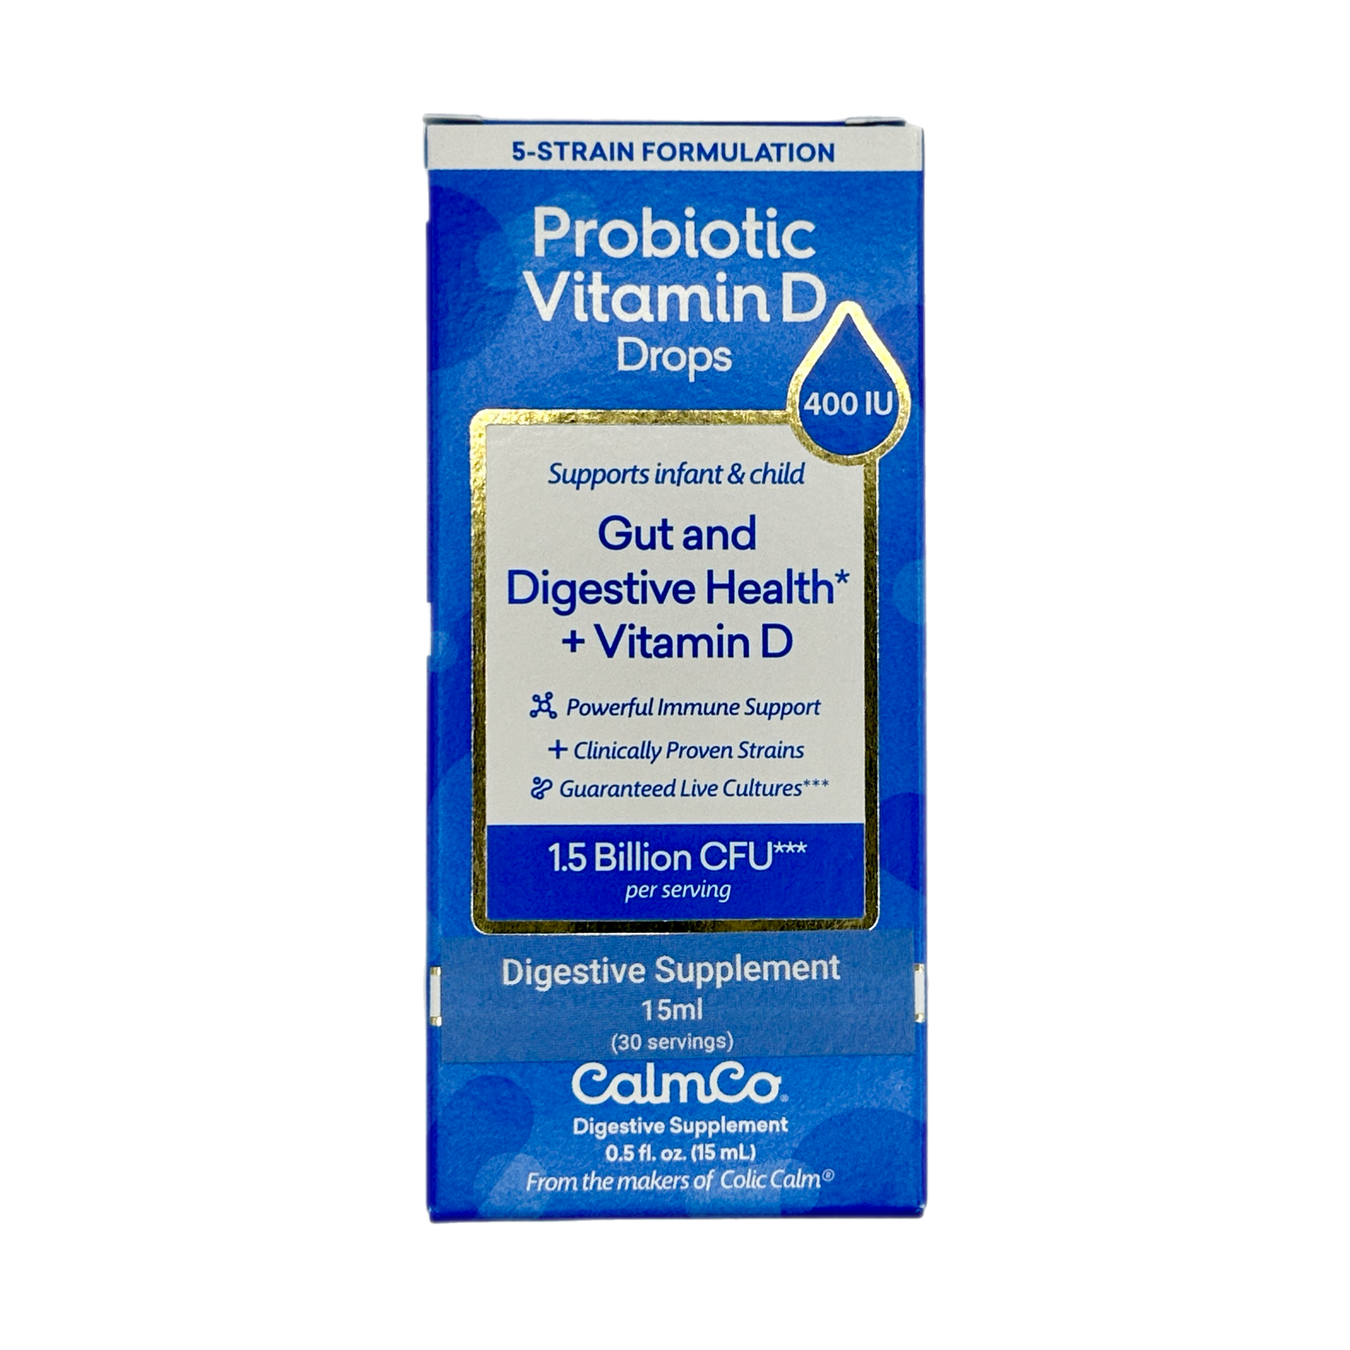 Baby Probiotic and Vitamin D Drops